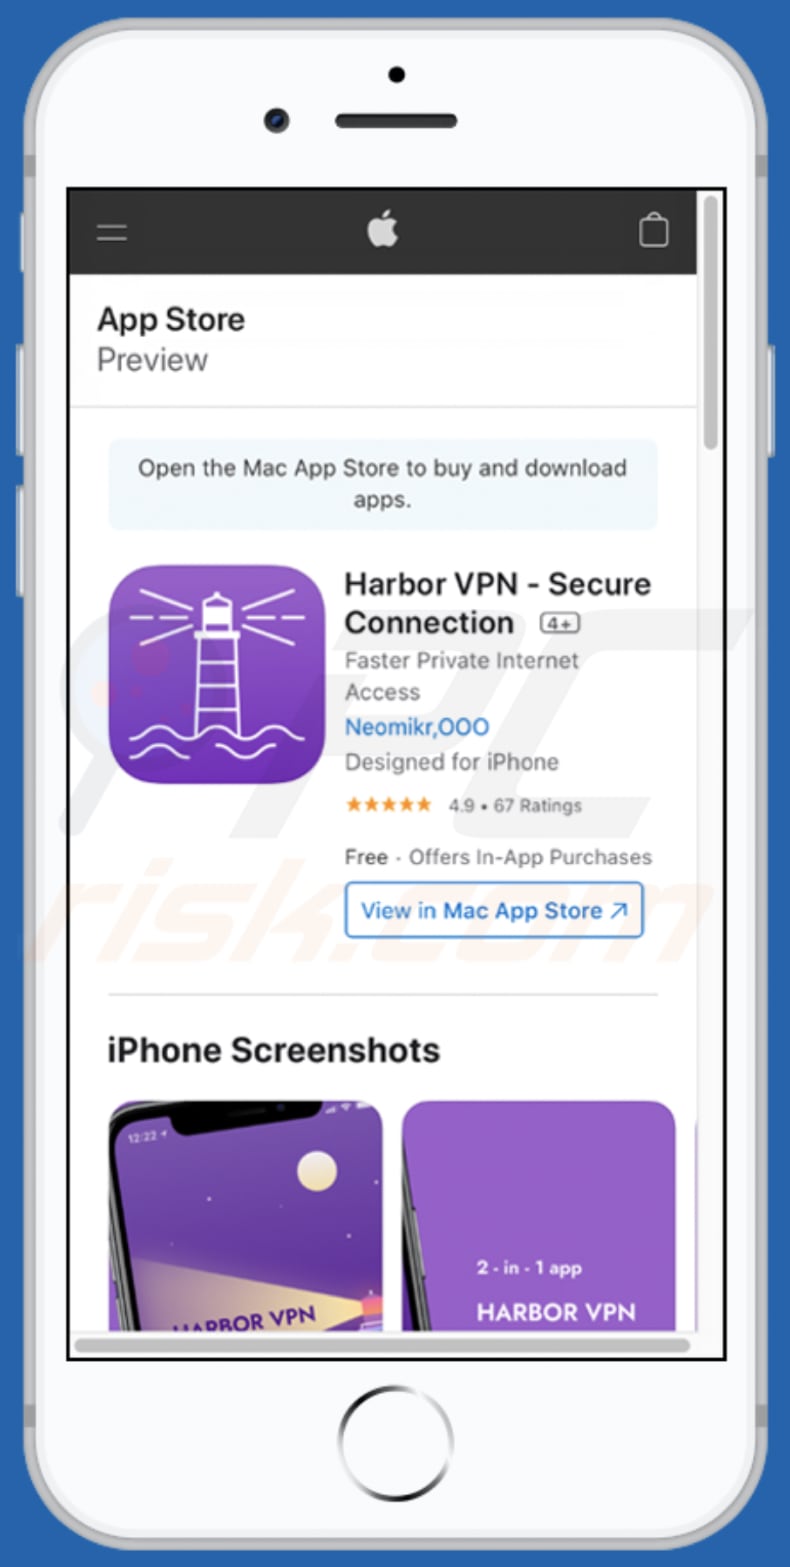 bestpeacheu.com pop-up scam promoted app called harbor vpn secure connection